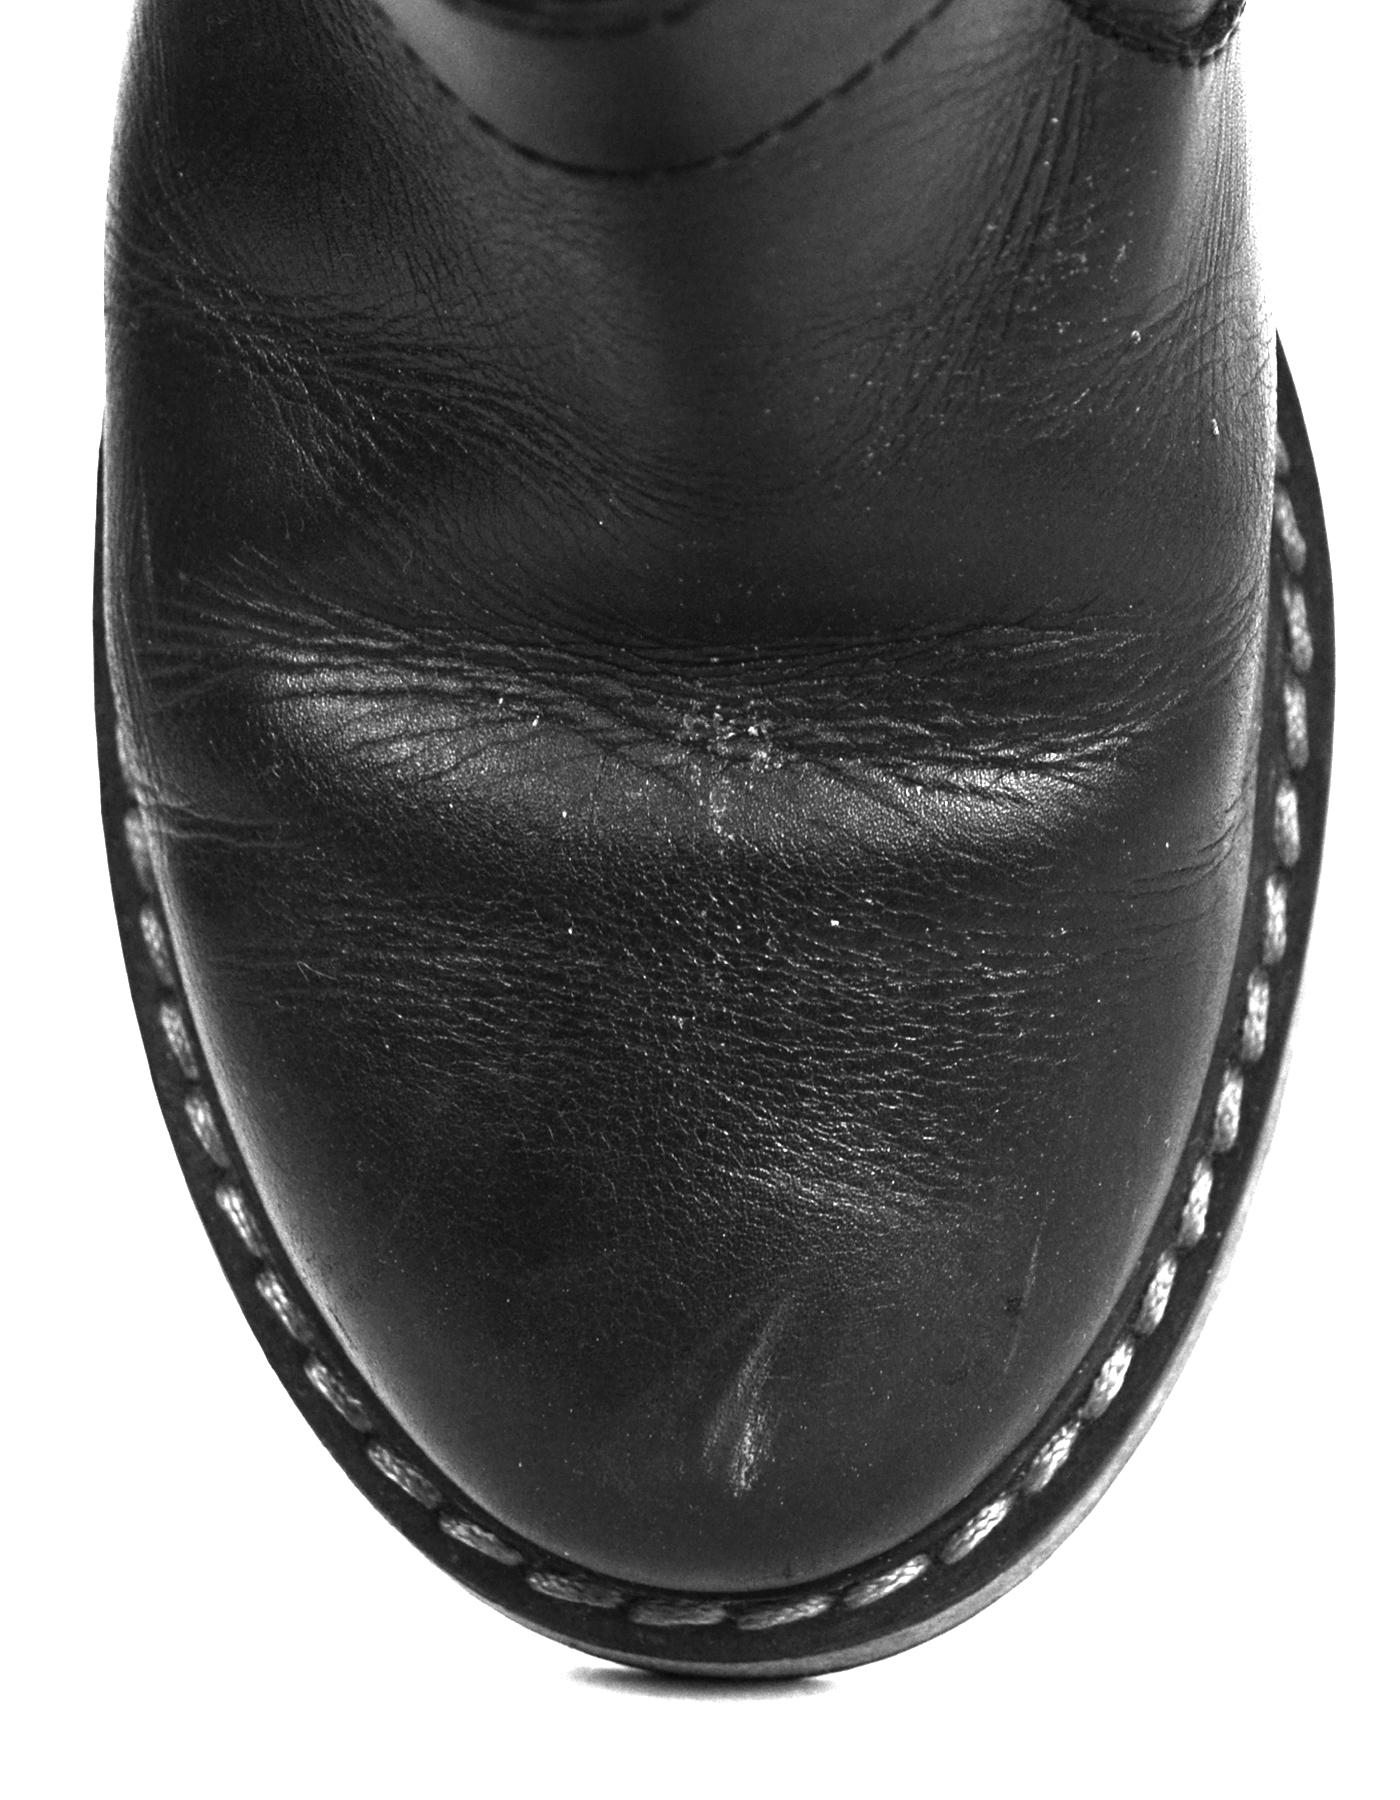 Fendi Black Leather Concealed Wedge Boot sz 38.5 6